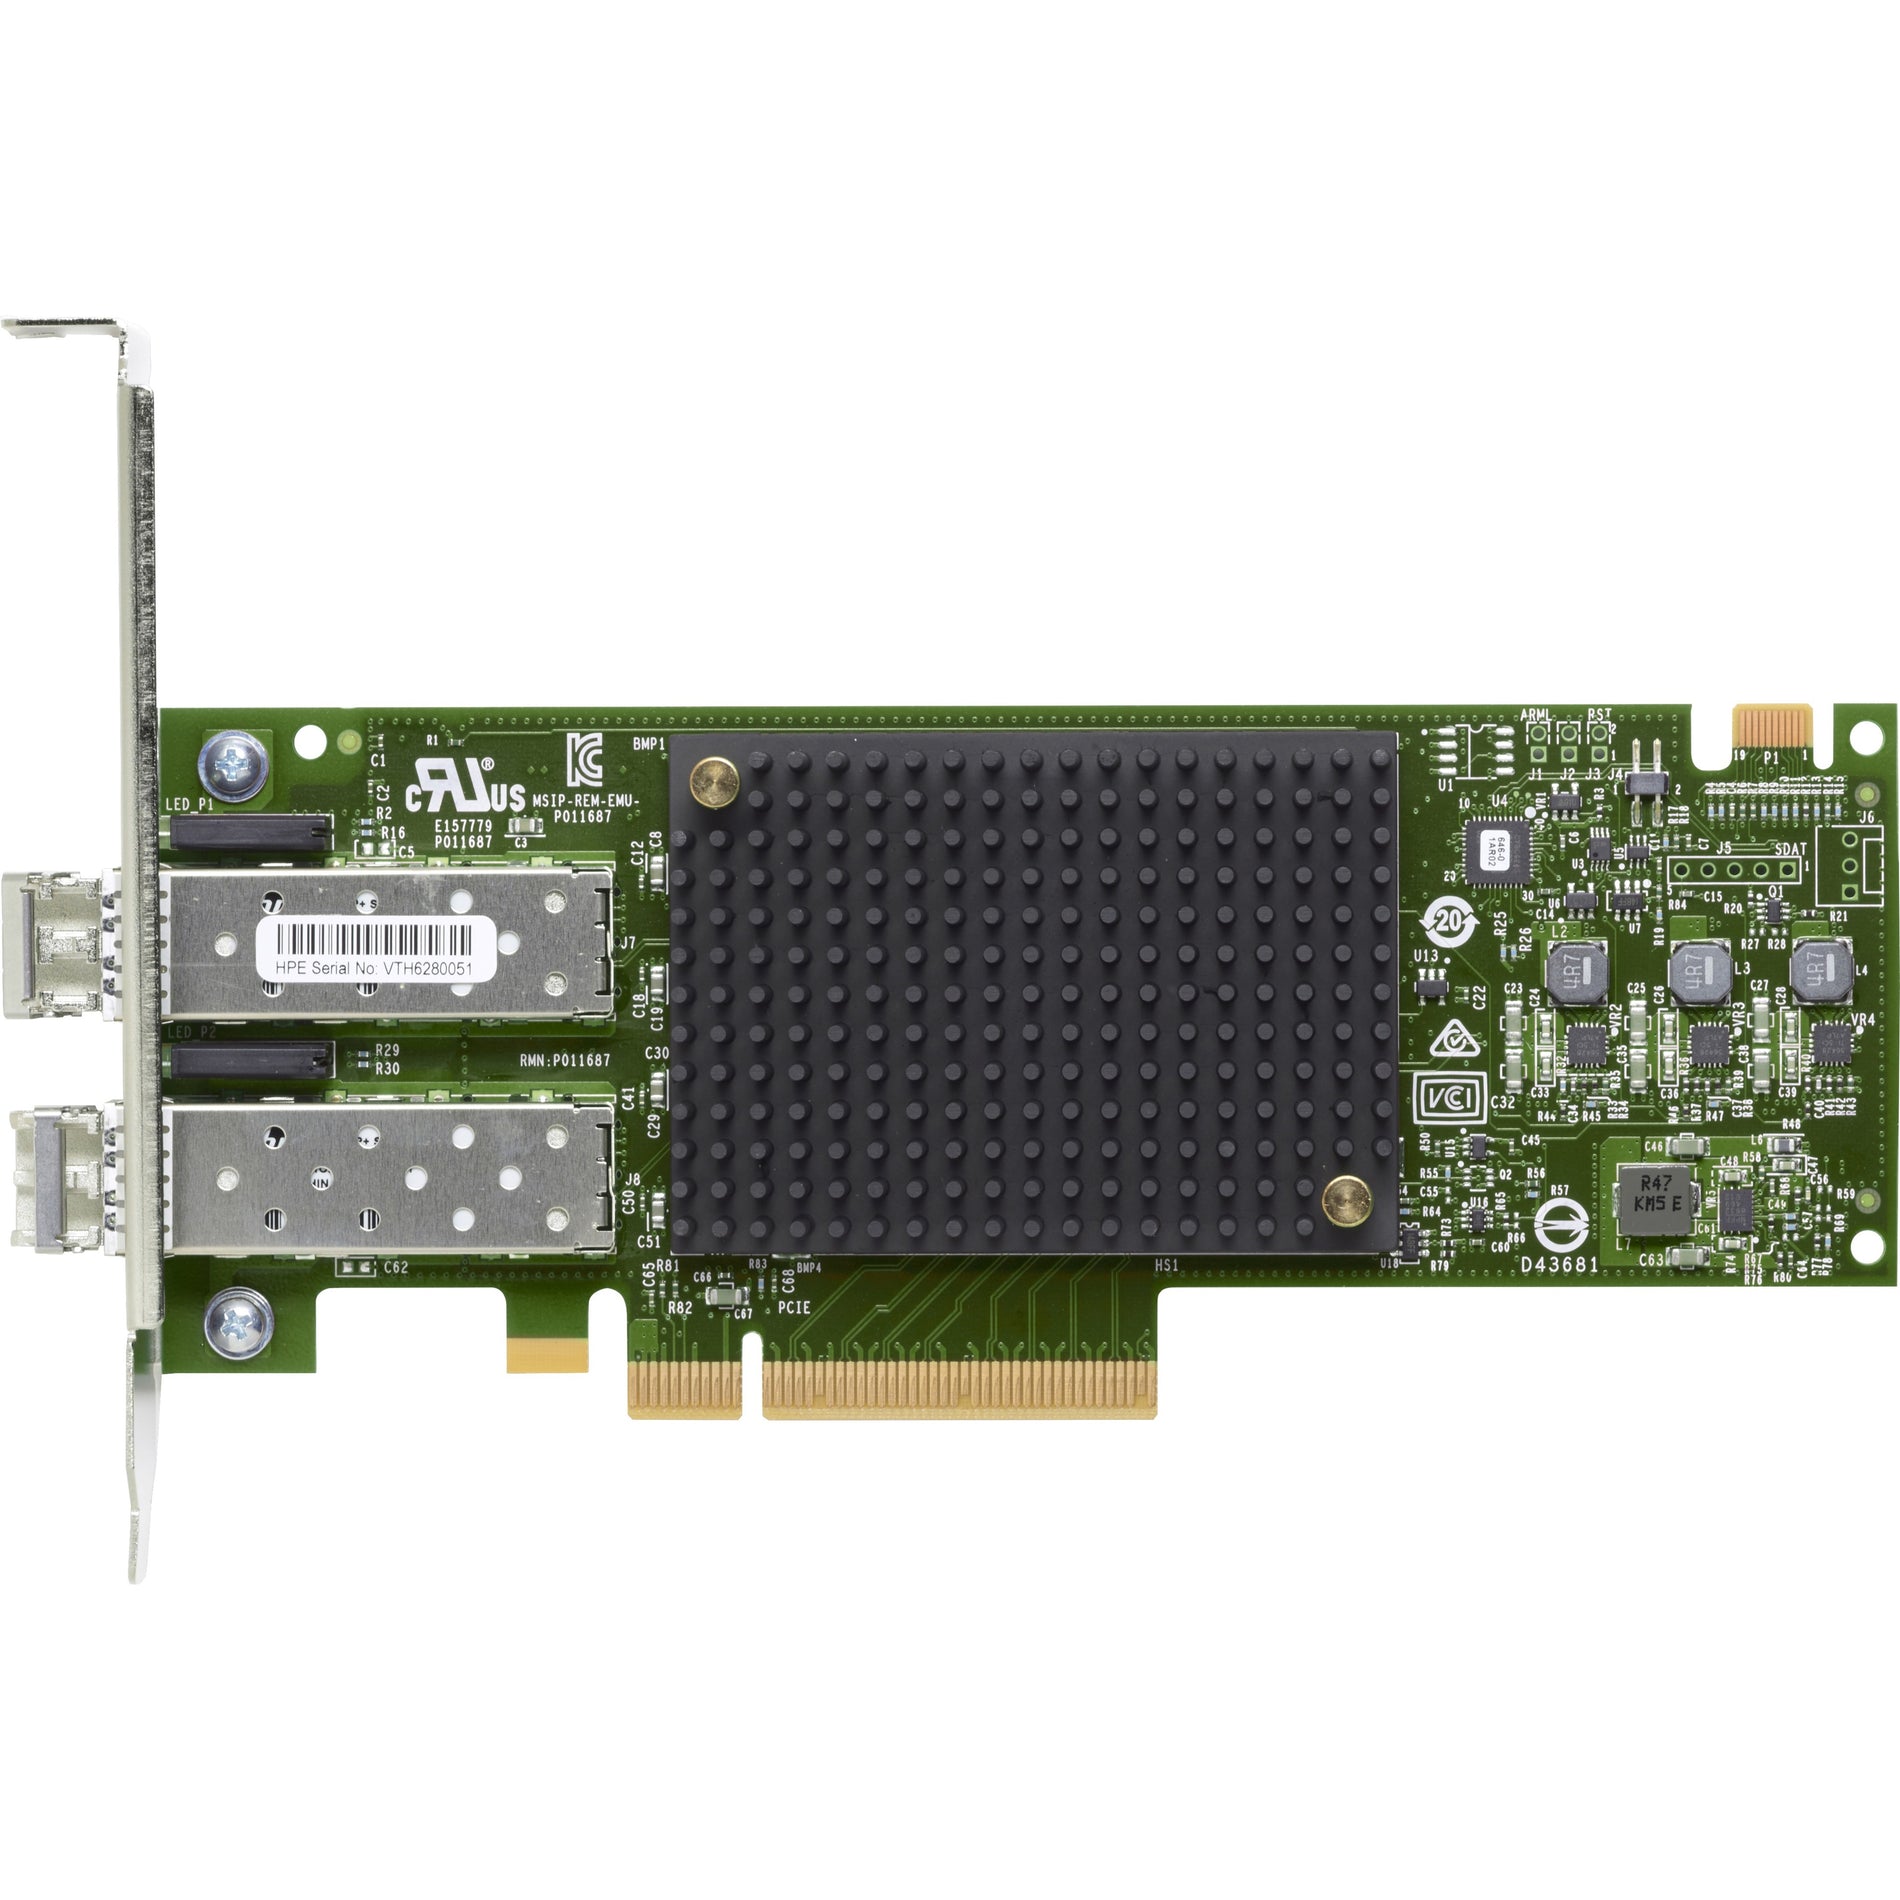 HPE Q0L14A StoreFabric SN1200E 16Gb محول مضاعف منفذ للألياف الضوئية للمضي في نقل البيانات بسرعة عالية لتعزيز الاتصال  اسم العلامة التجارية: HPE